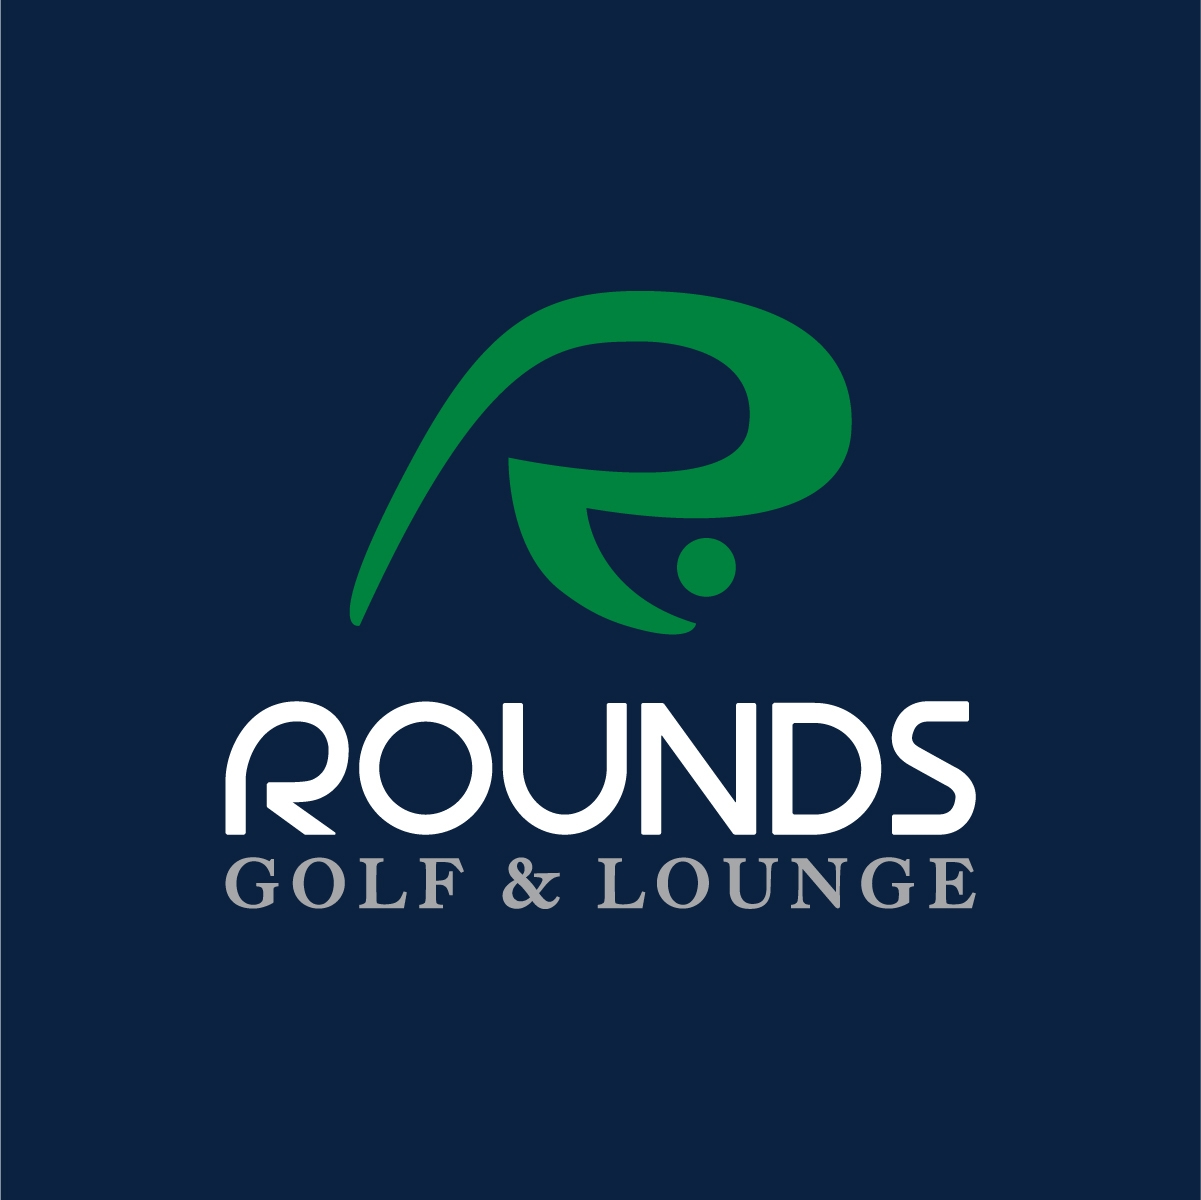 Rounds Golf & Lounge logo